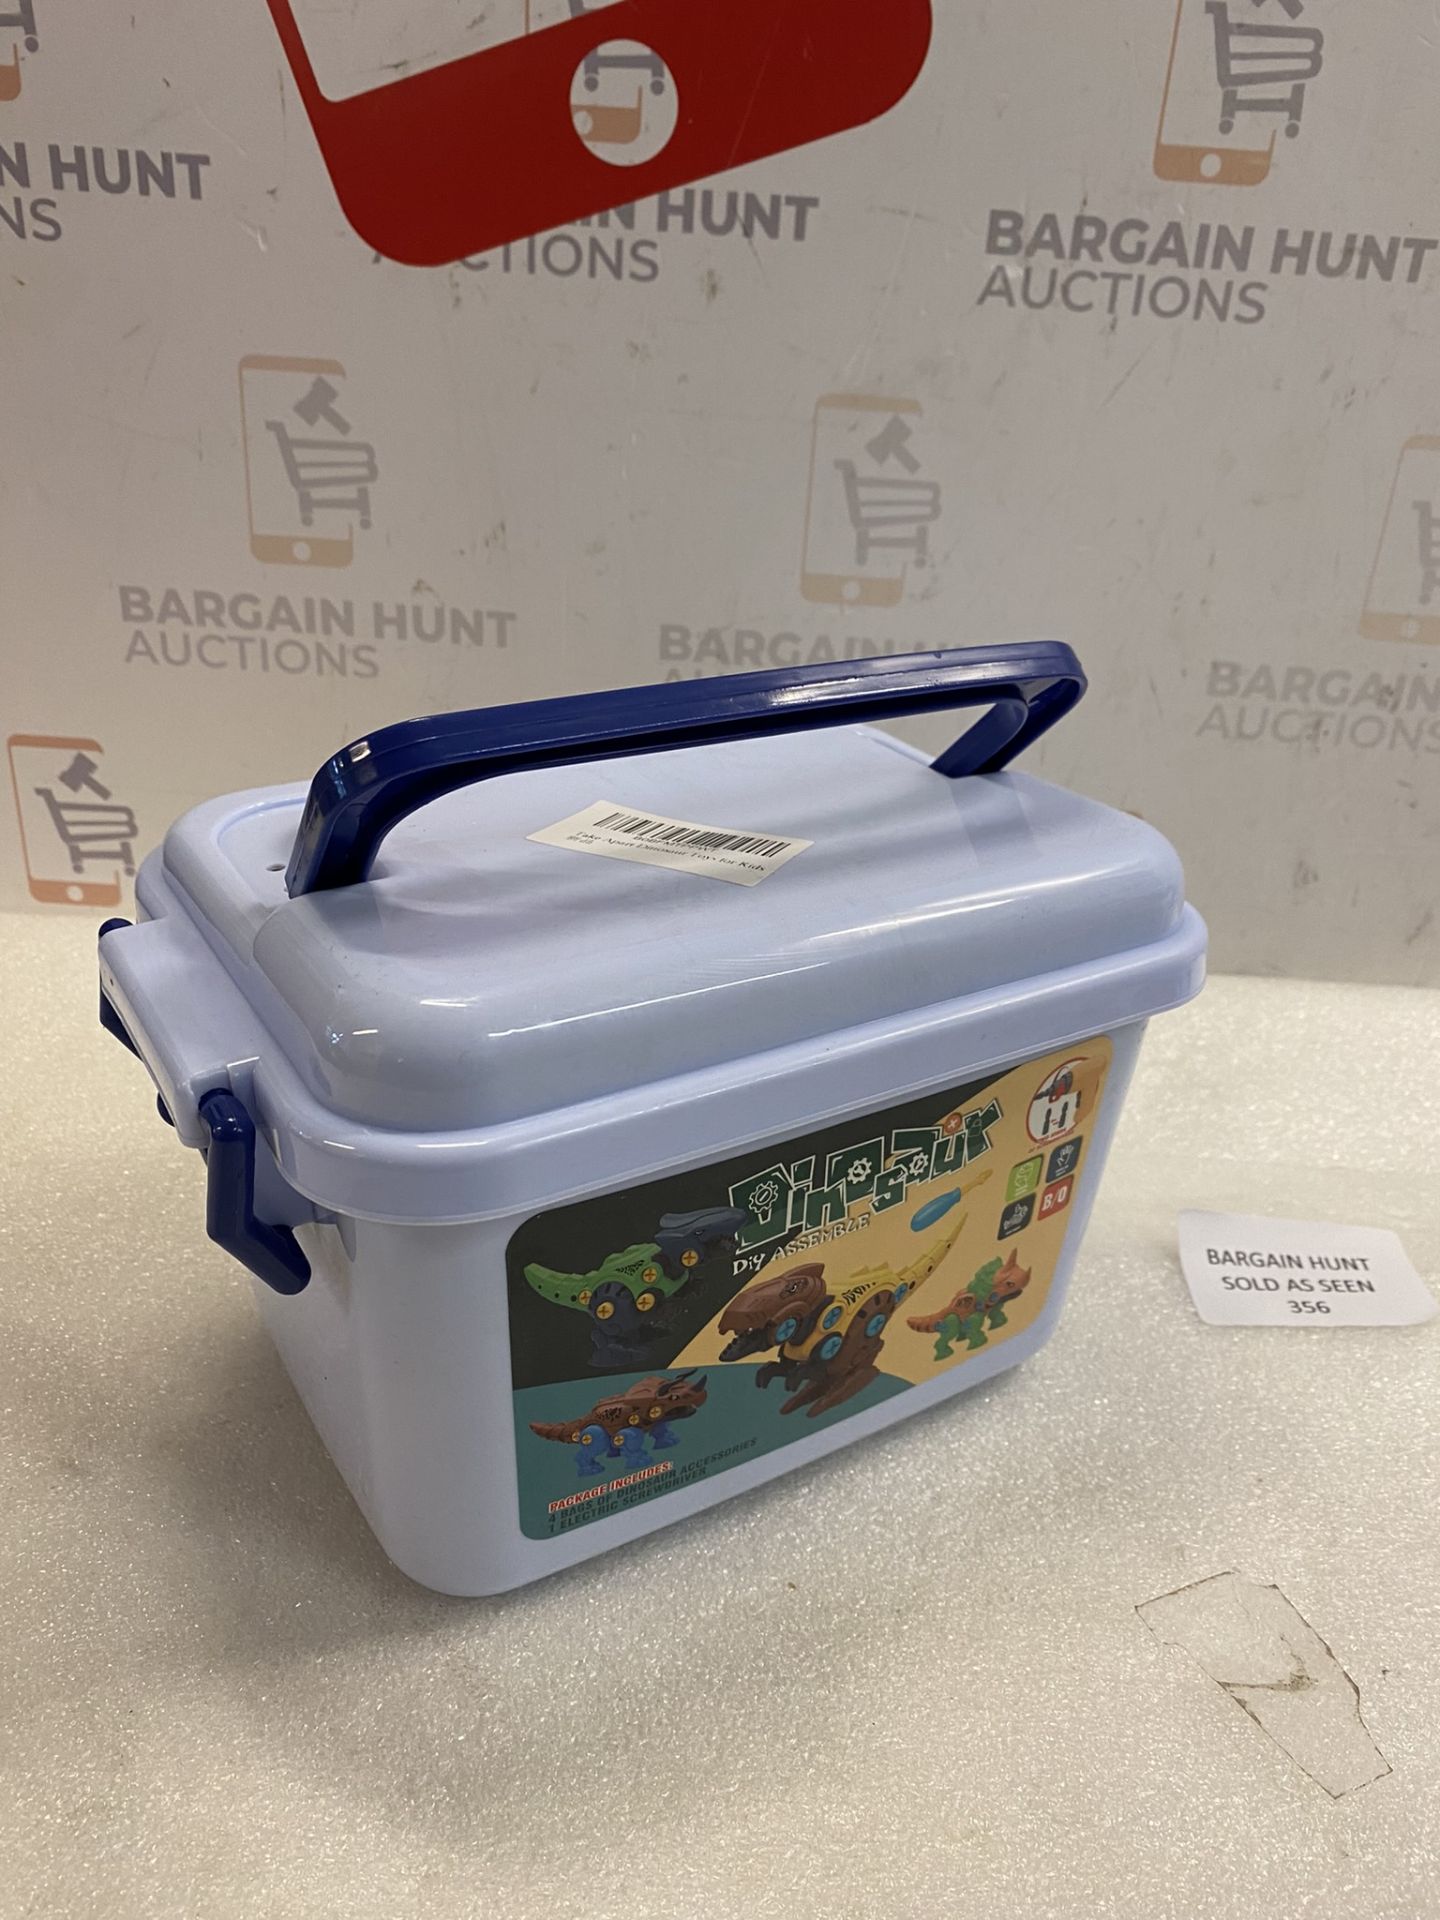 HoyMie Take Apart Dinosaur Toys for Kids - STEM Educational DIY Plastic Dinosaurs Set with Box & - Image 2 of 2